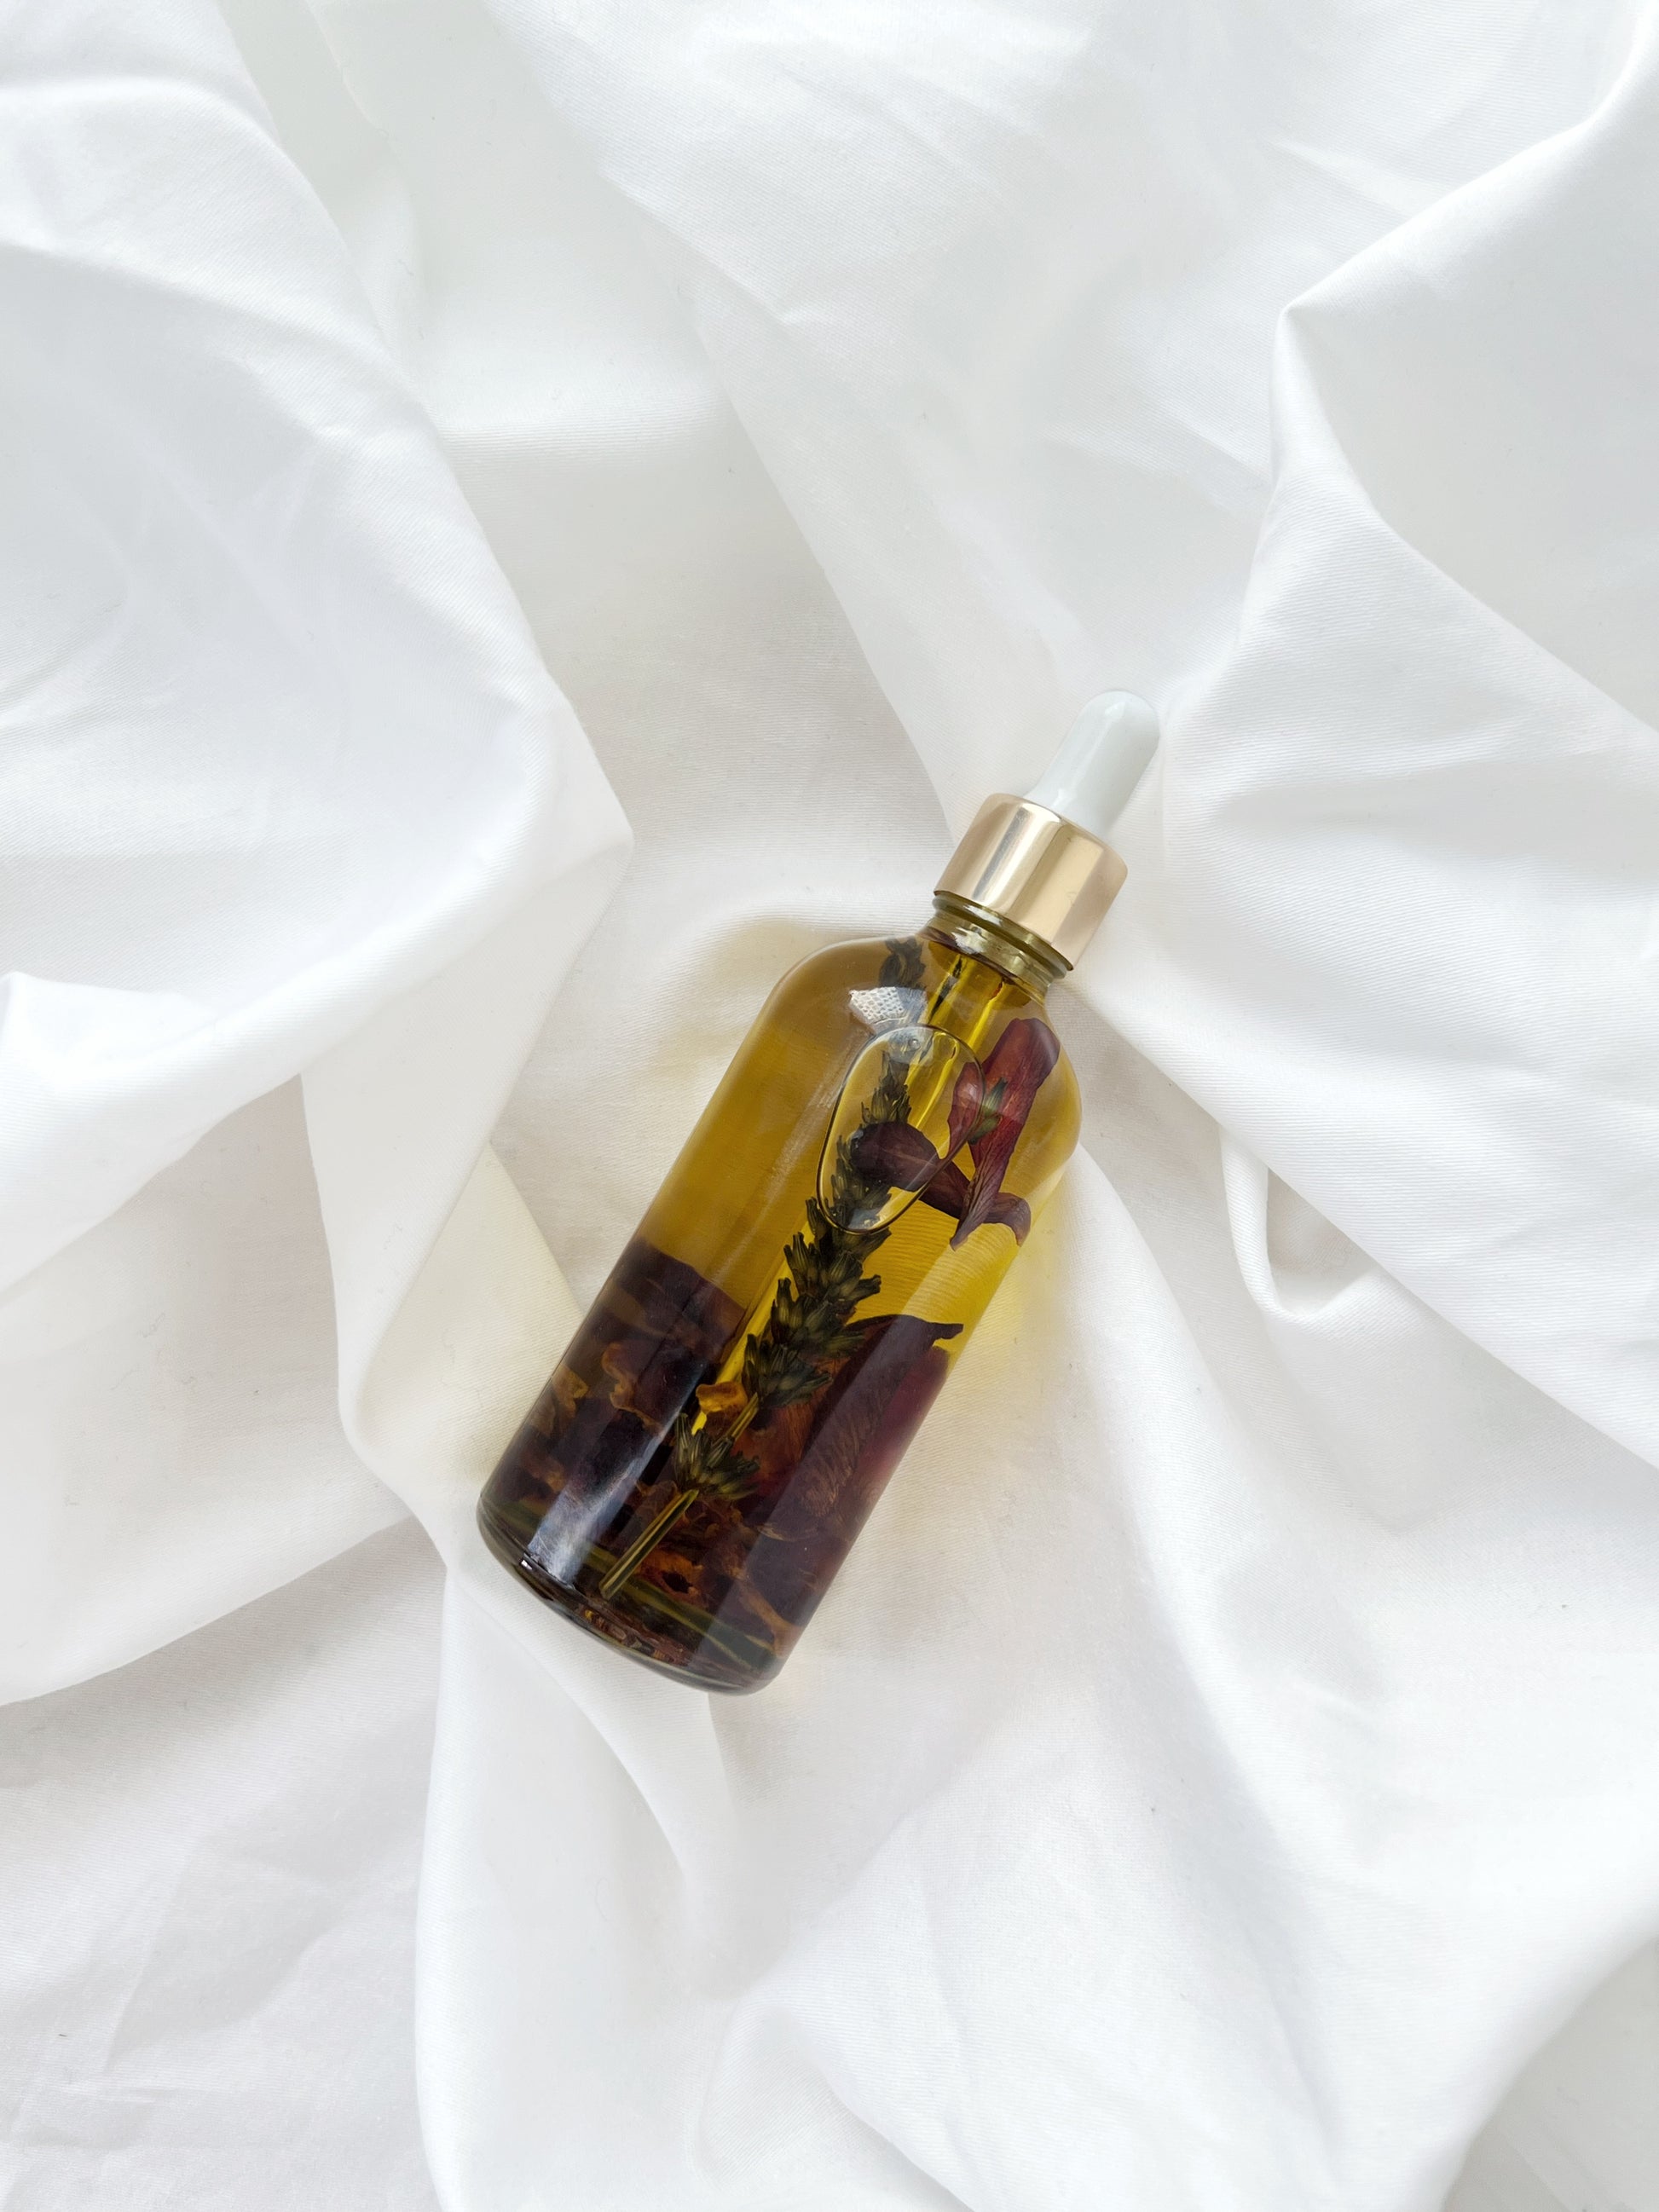 Nourishing Botanical Body Oil. Ingredients include: Sweet Almond Oil, Avocado Oil, Rose Petals, Lavender Buds, Calendula Petals